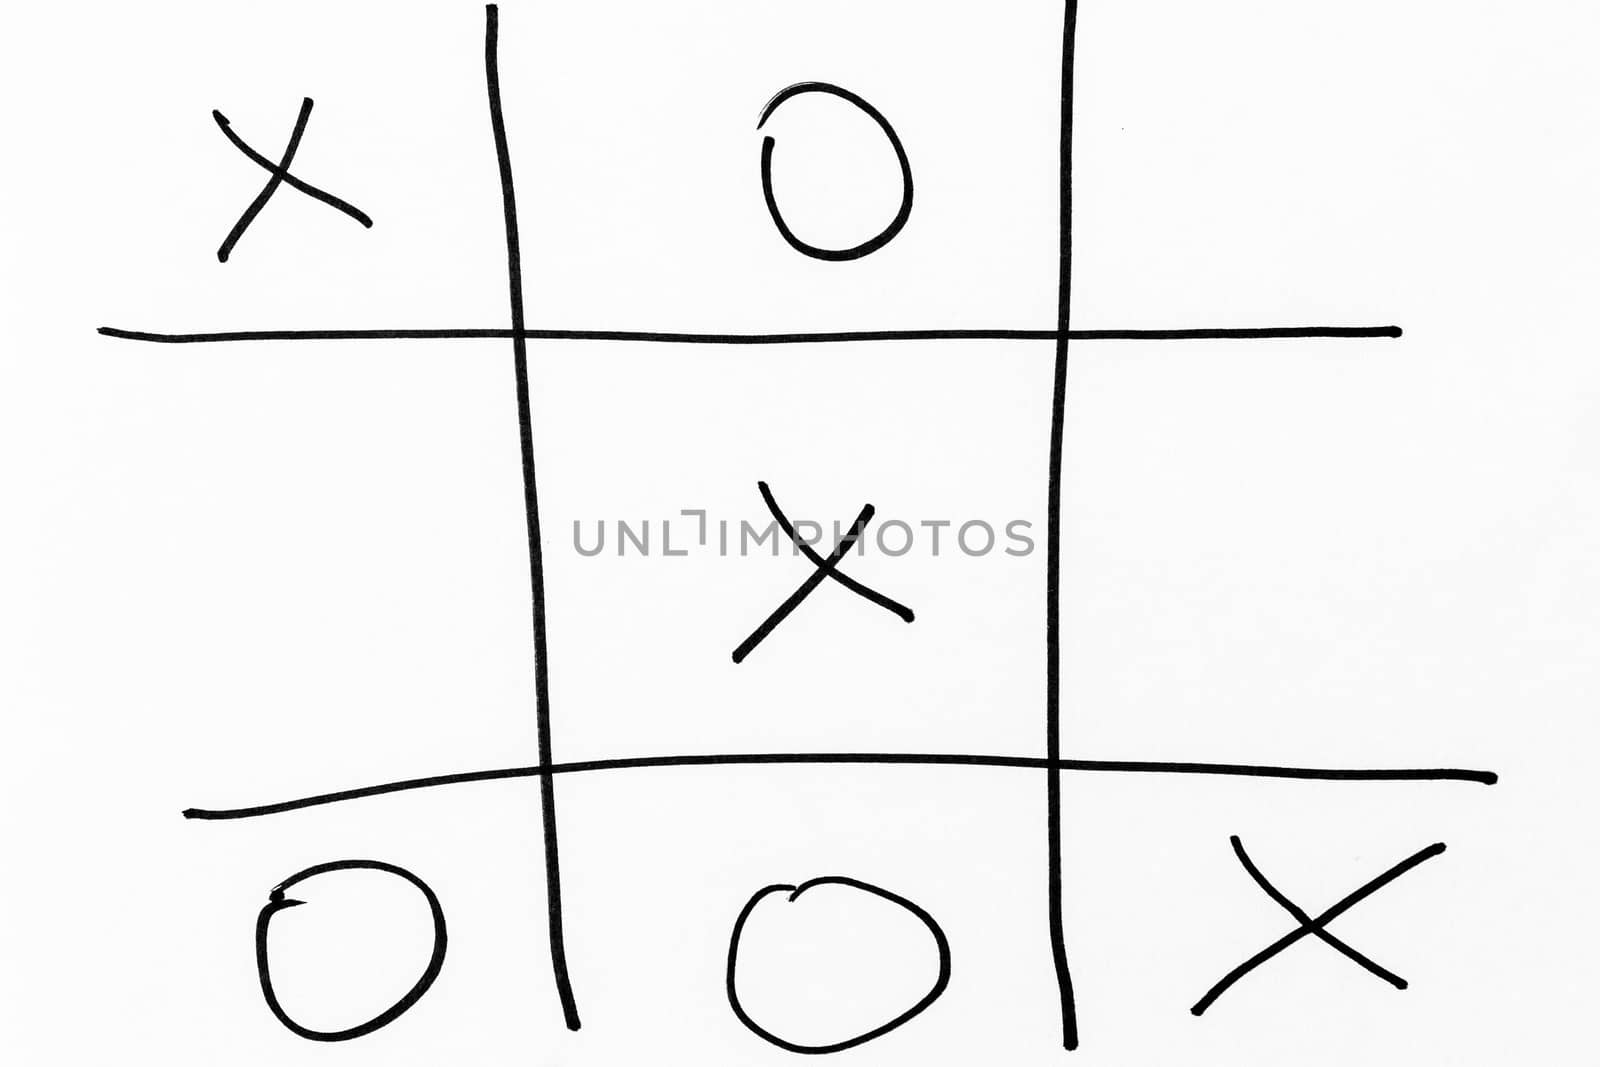 A hand drawn tic-tac-toe game  grid